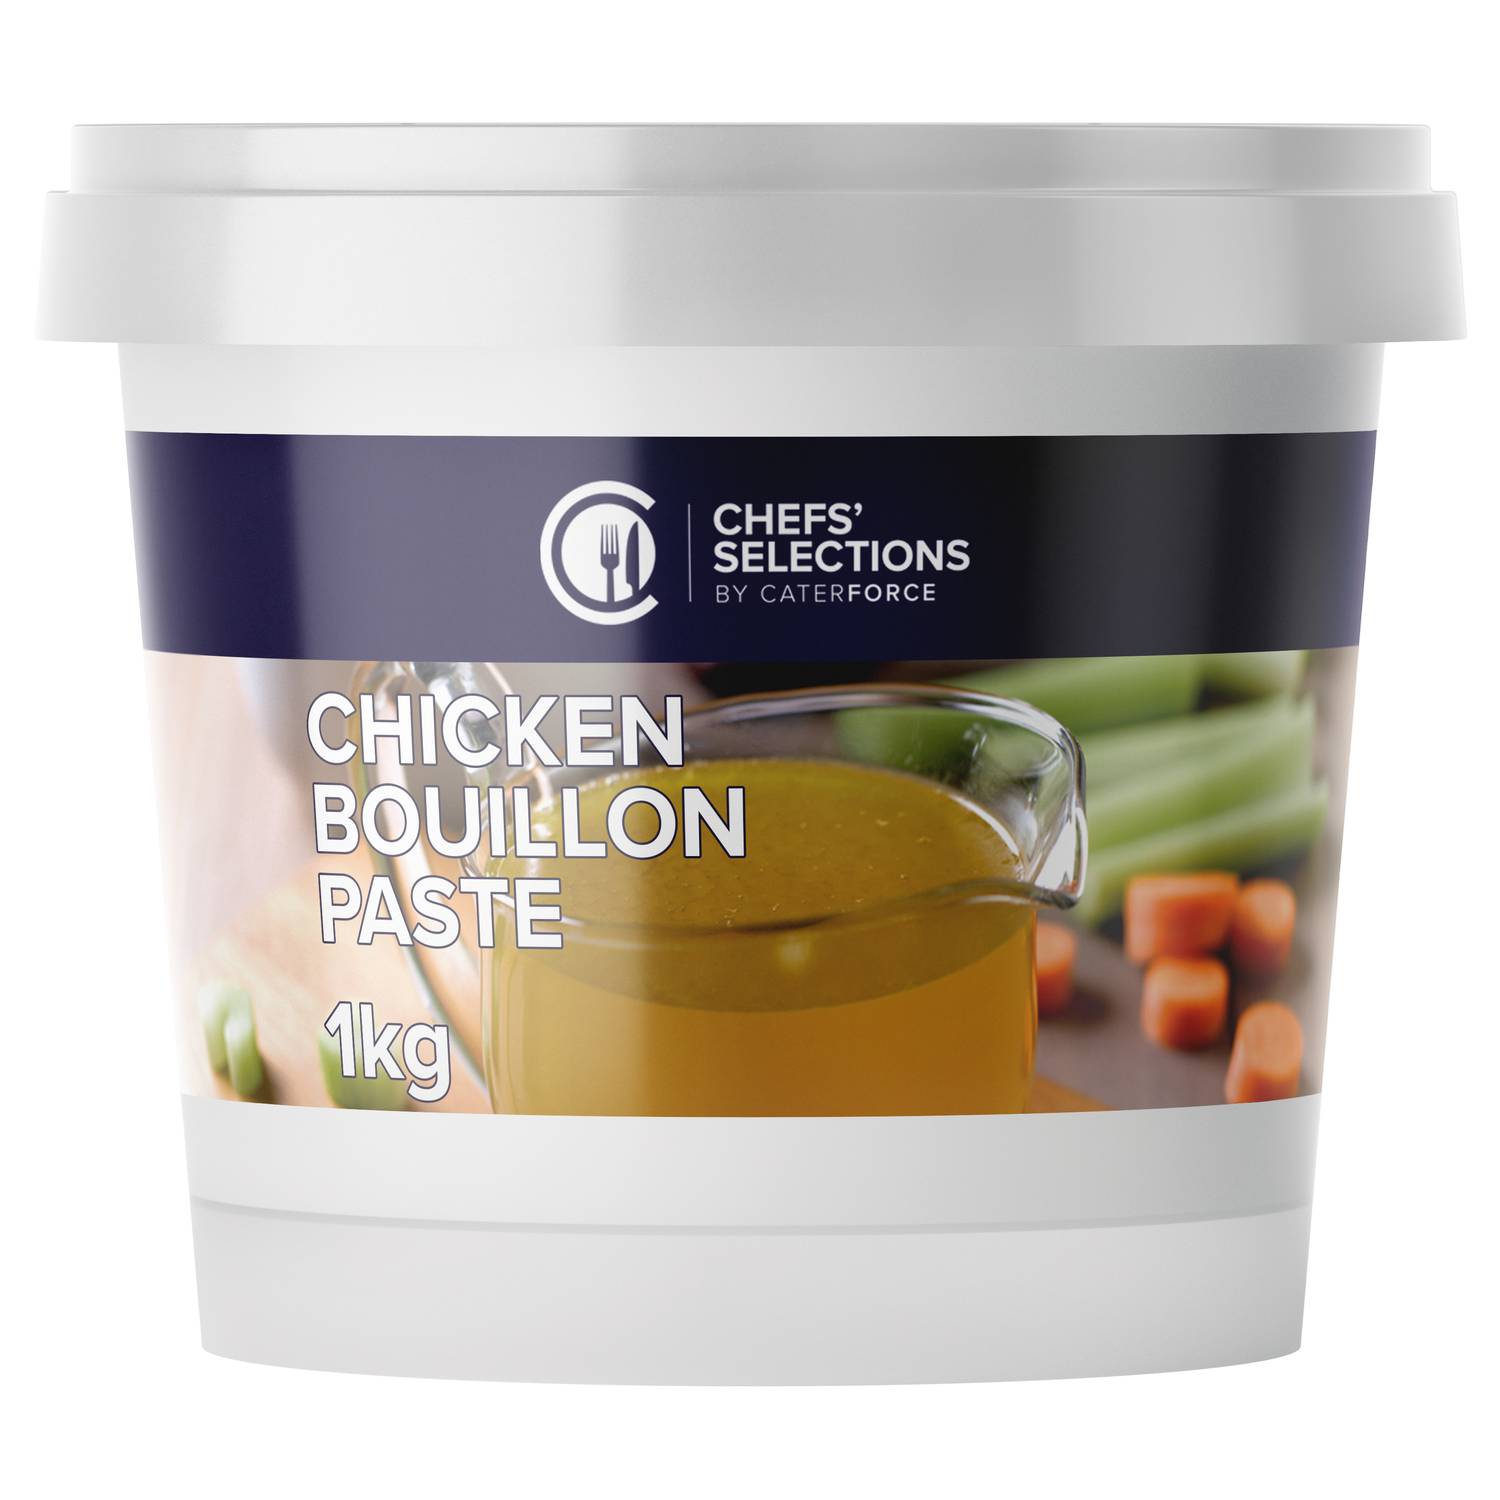 Chefs’ Selections Chicken Bouillon Paste (2 x 1kg)